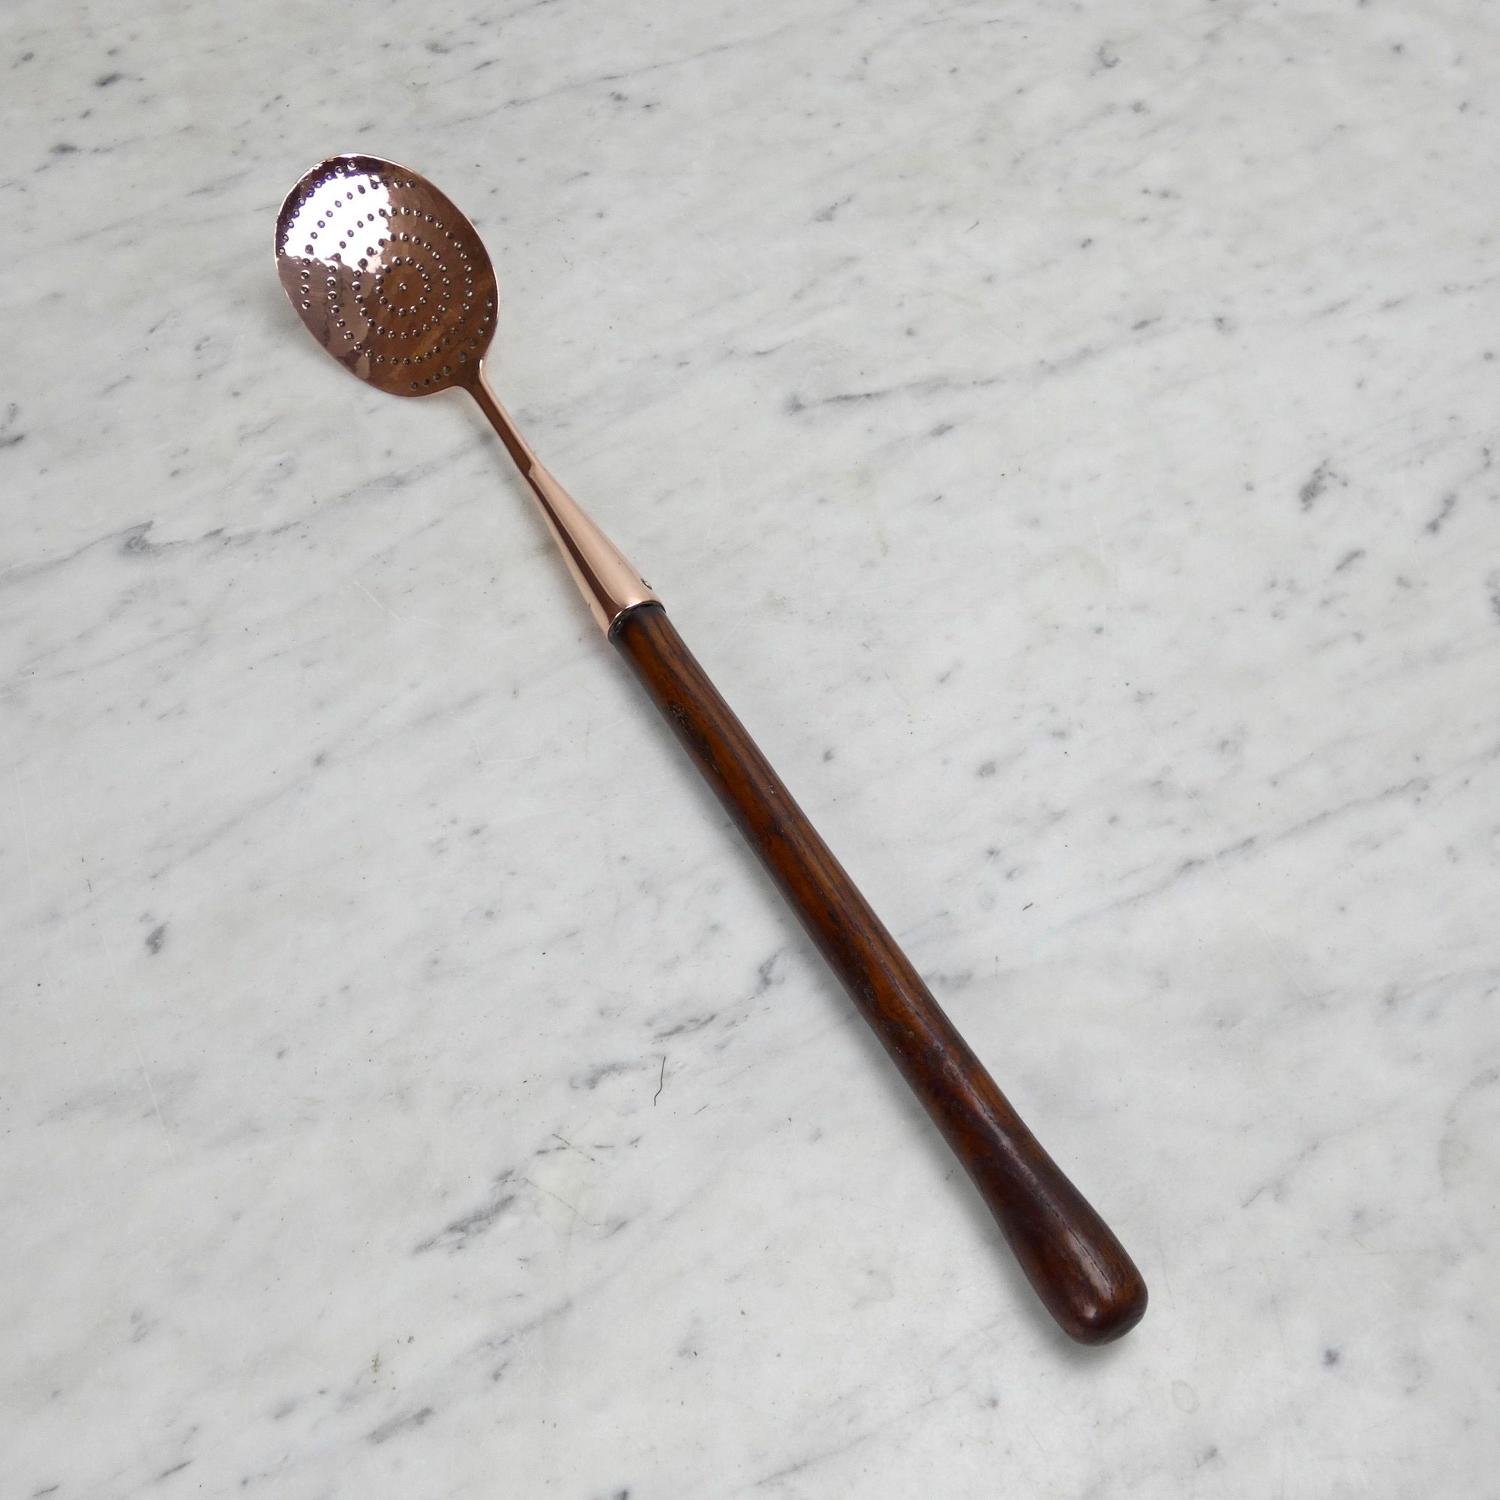 Copper straining spoon.